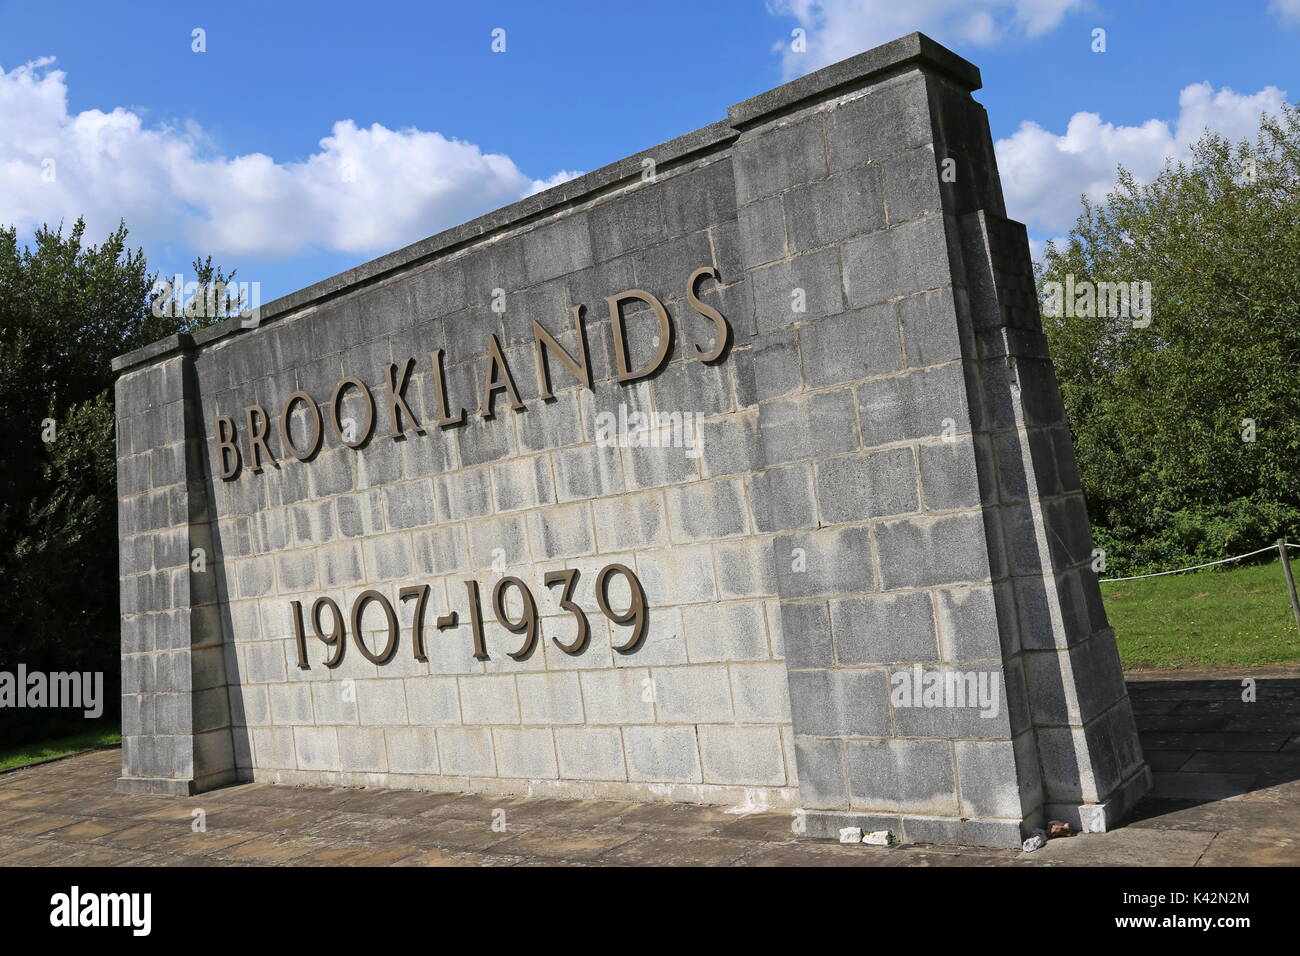 Brooklands Brooklands Museum, Mémorial, Weybridge, Surrey, Angleterre, Grande-Bretagne, Royaume-Uni, UK, Europe Banque D'Images